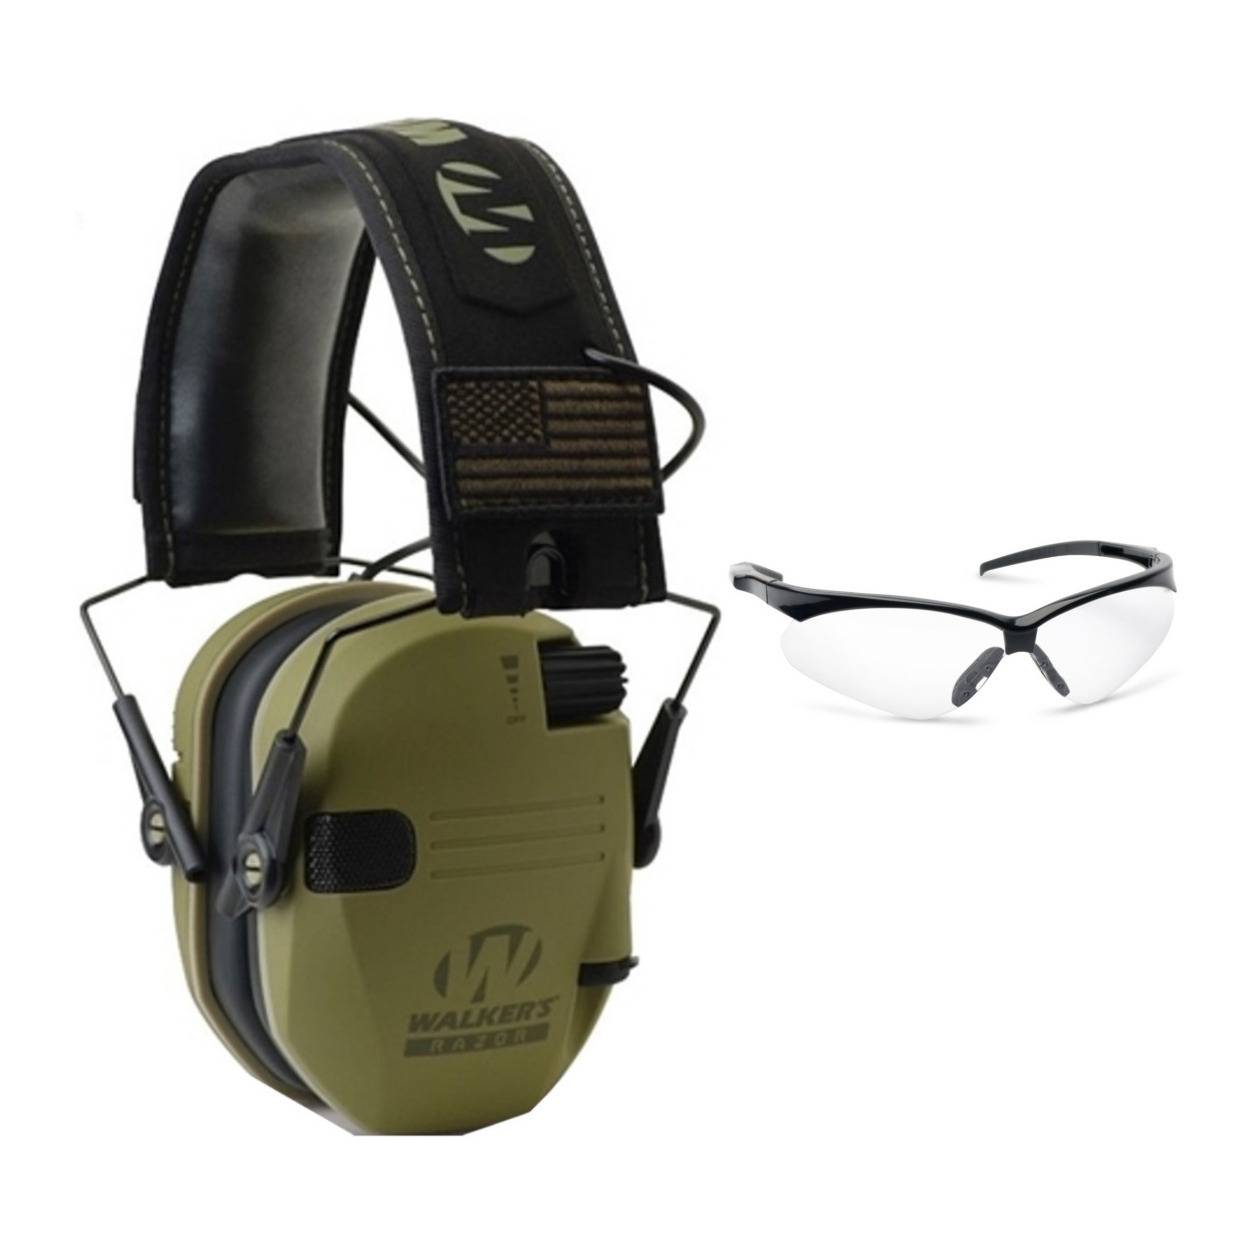 Walker's Razor Slim Electronic Shooting Range Earmuffs (OD Patriot) and Glasses